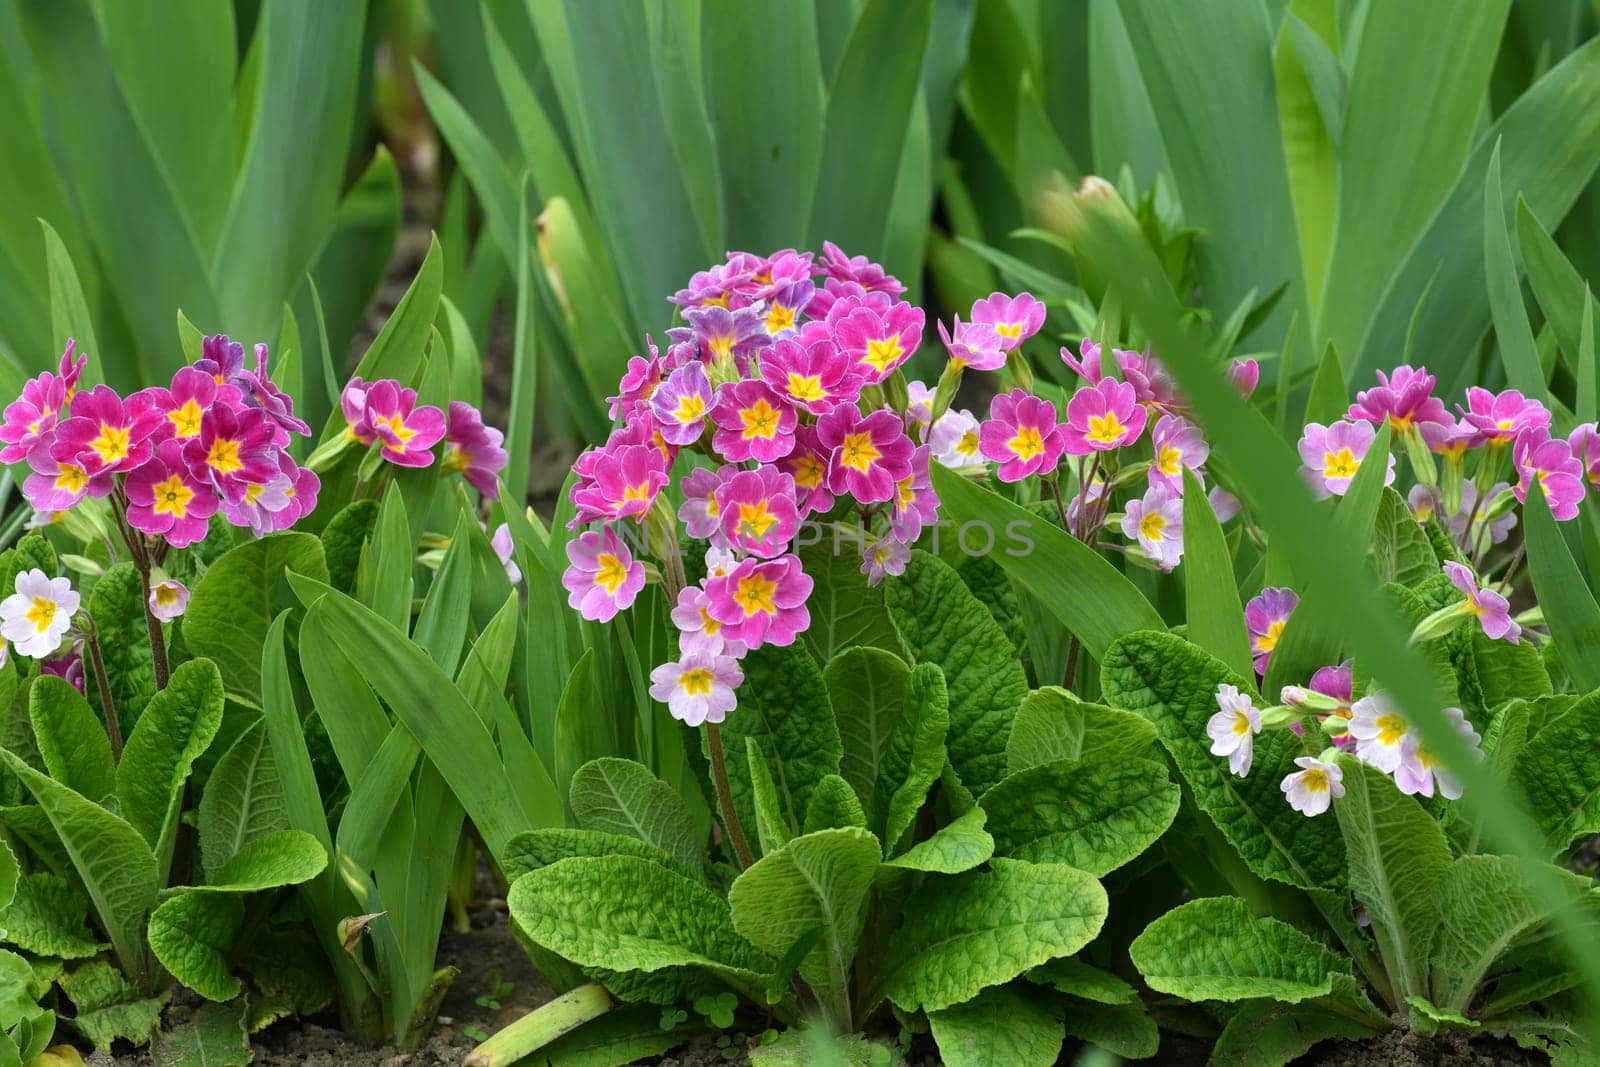 Primula vulgaris - an early spring flower, primrose by olgavolodina